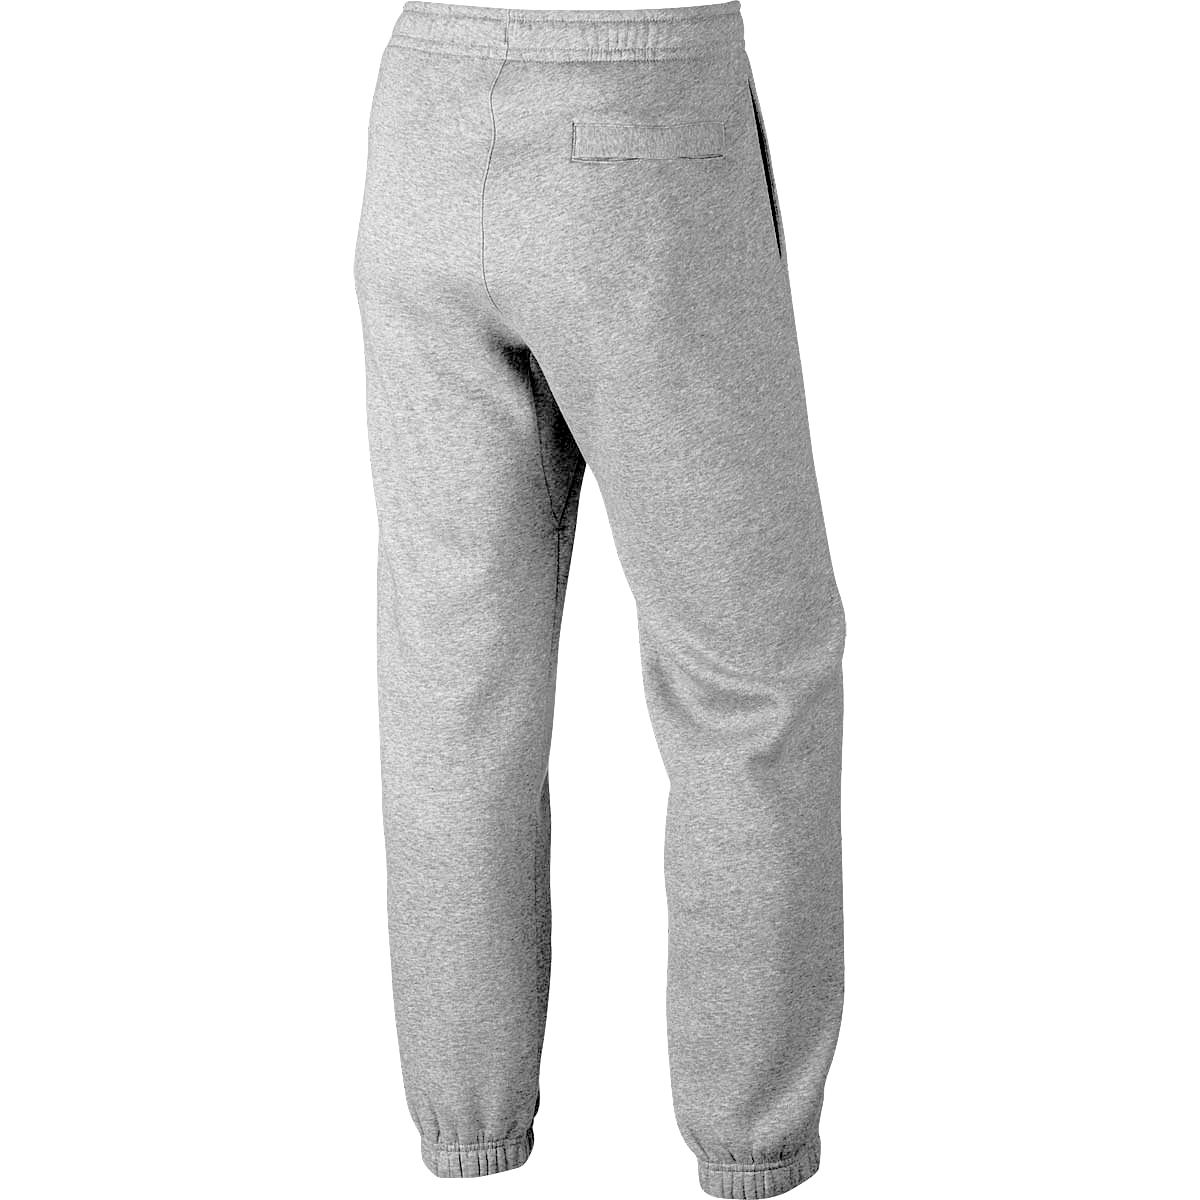 Requisitos Directamente nivel Nike Men's NSW Cuffed Fleece Club Pants Light Grey/White 804406-063 (Size  2X)